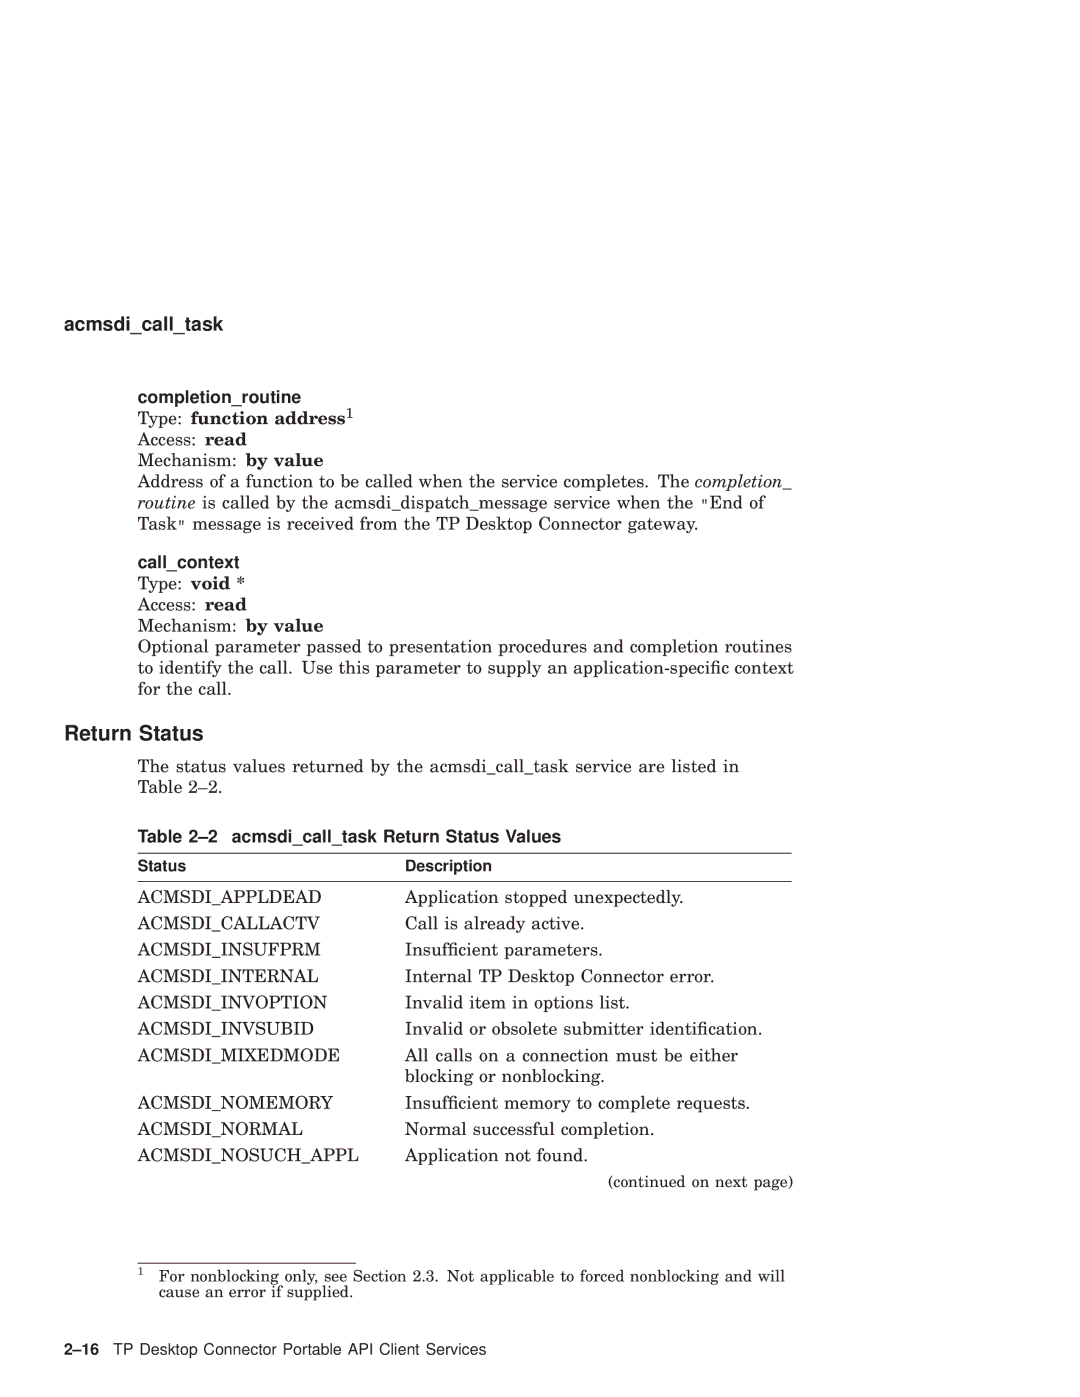 Compaq AAPVNFGTE manual Completionroutine, Acmsdicalltask Return Status Values 